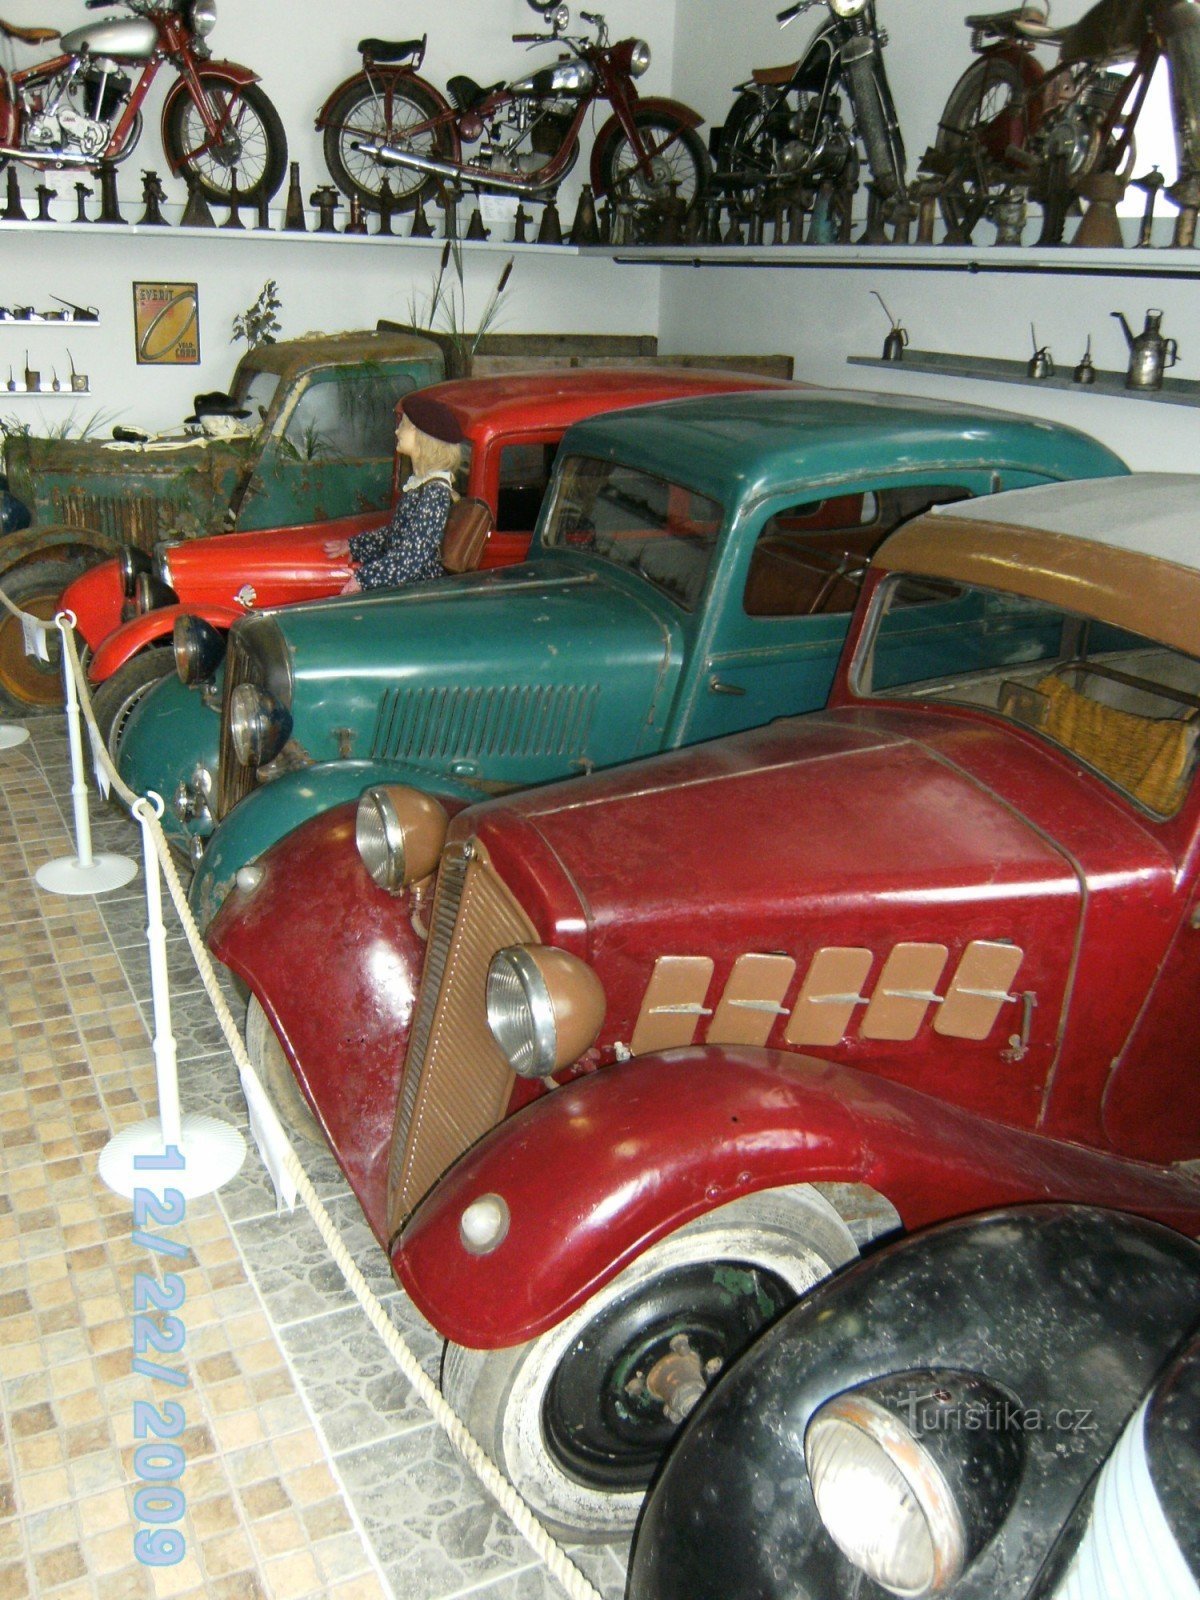 Znojmo - Museo del Automóvil